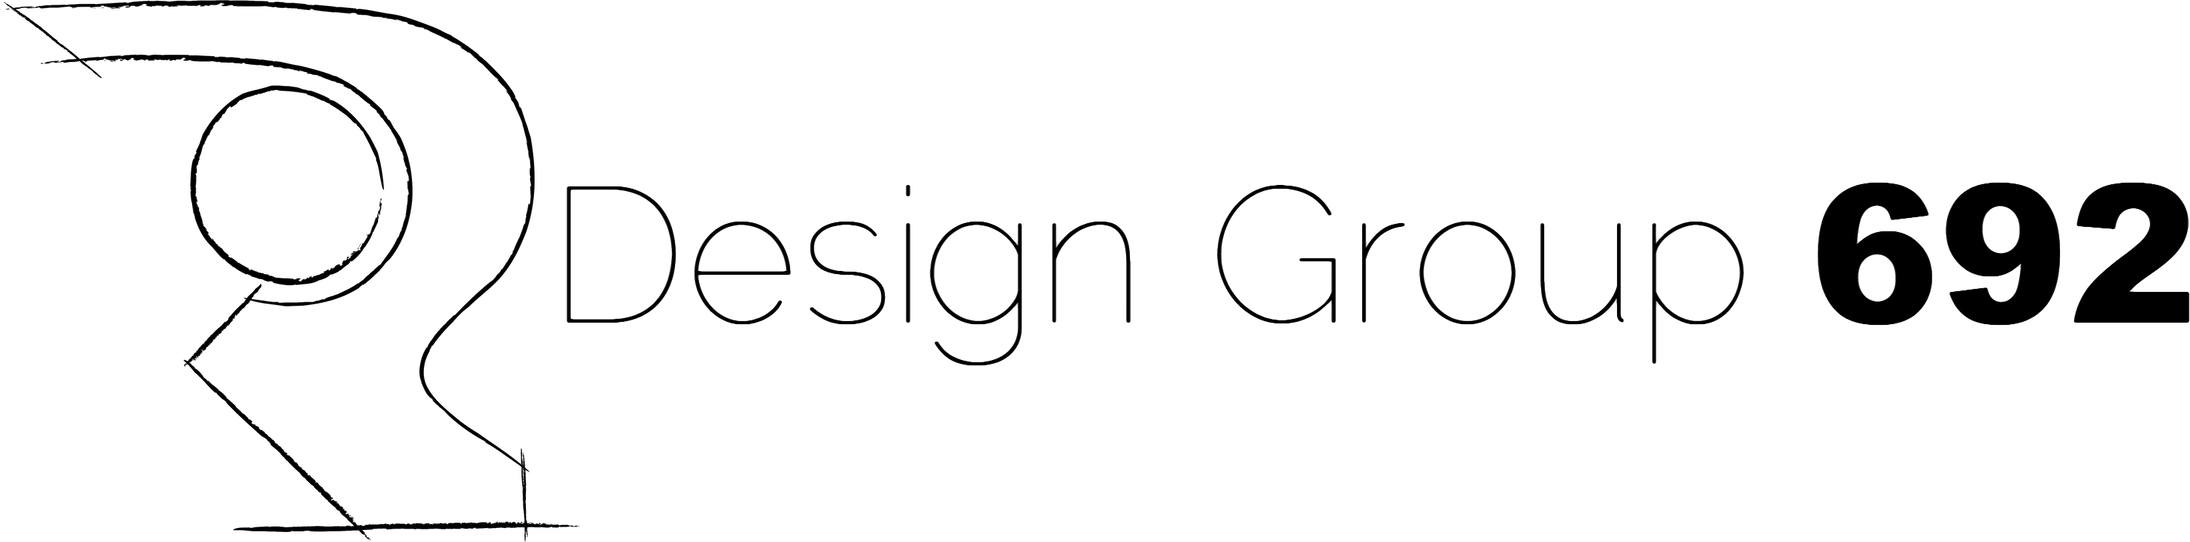 Design Group 692